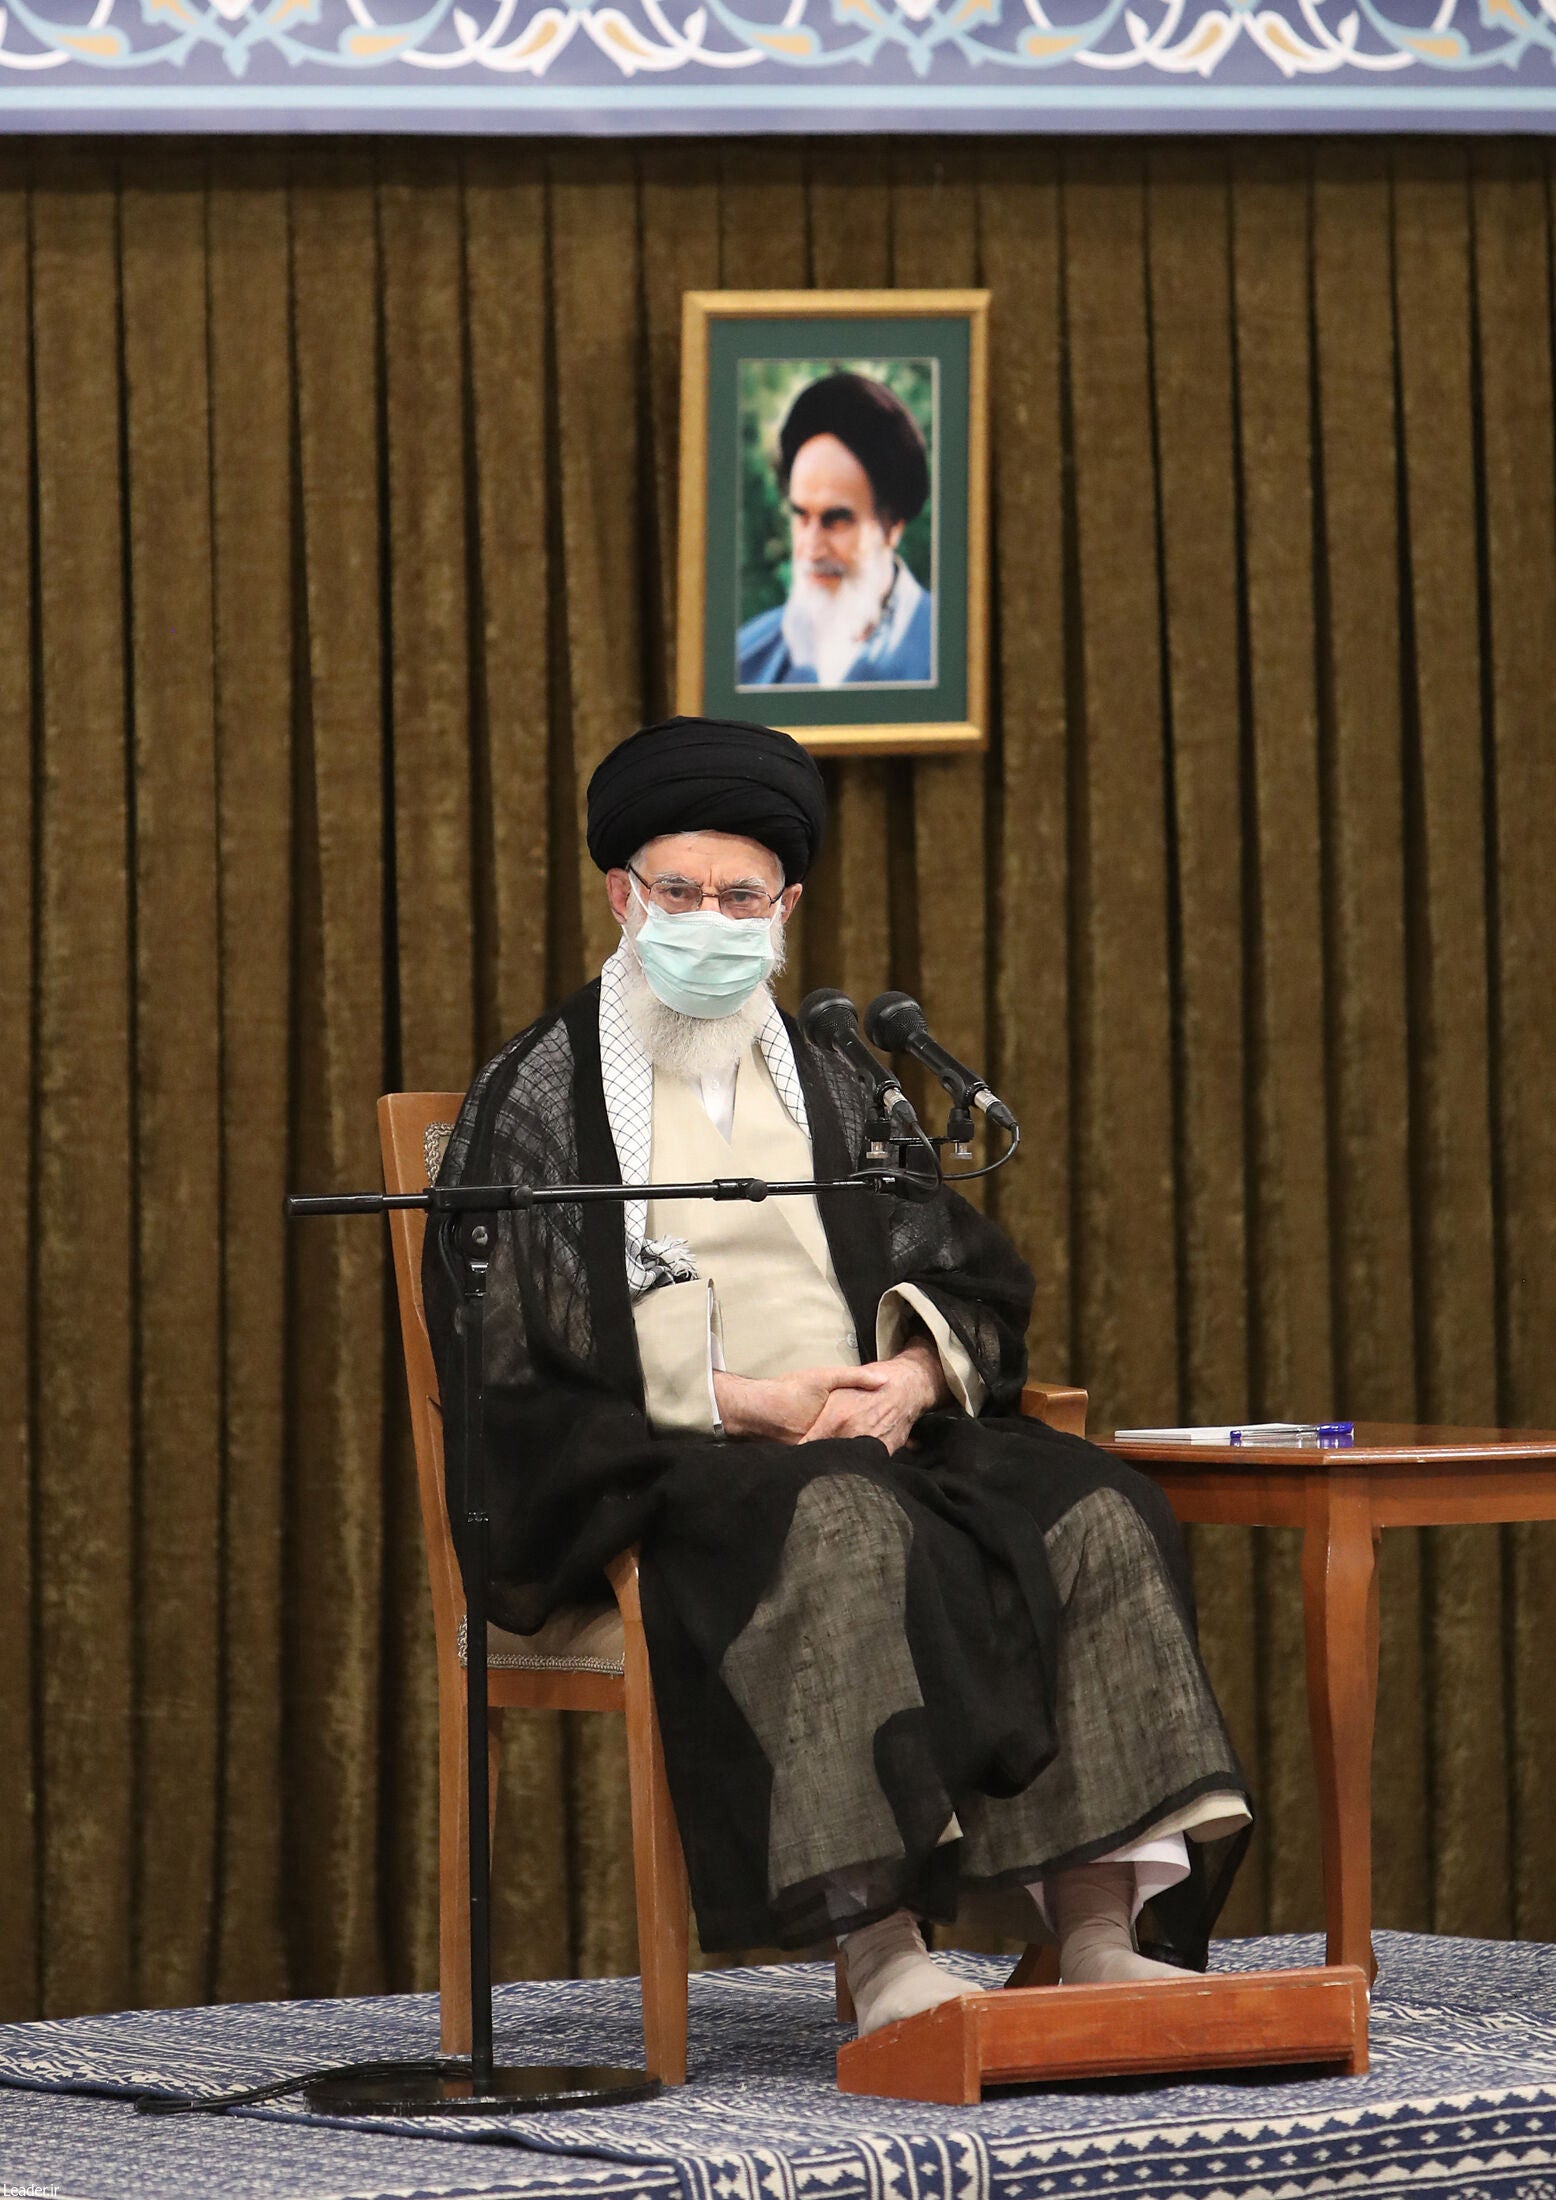 Iran’s supreme leader, Ayatollah Ali Khamenei, has accused Iran’s enemies of trying to exploit the situation